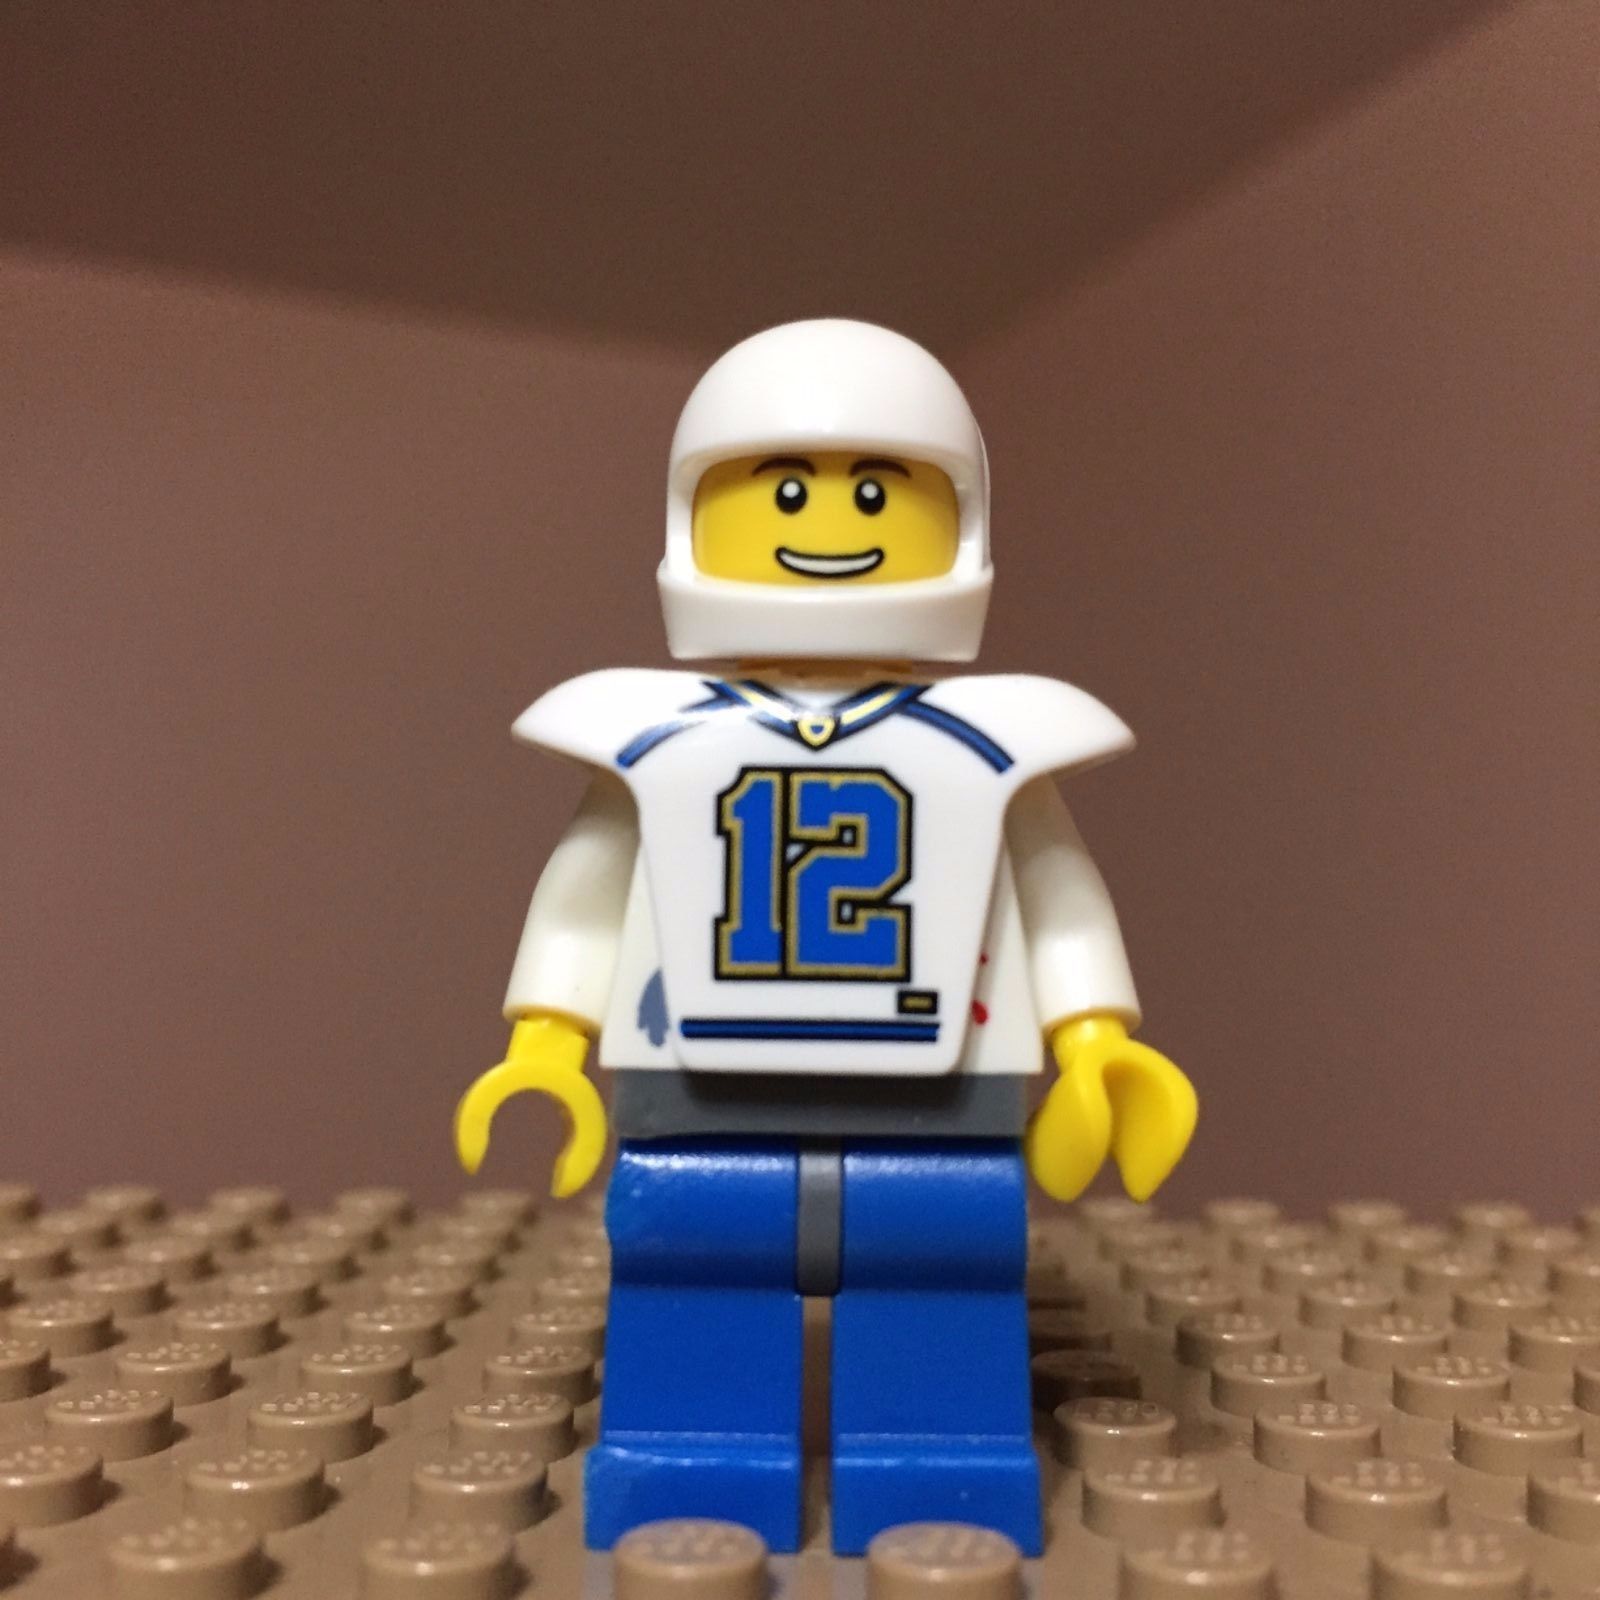 LEGO Football Player Minifigure - Toys & Hobbies